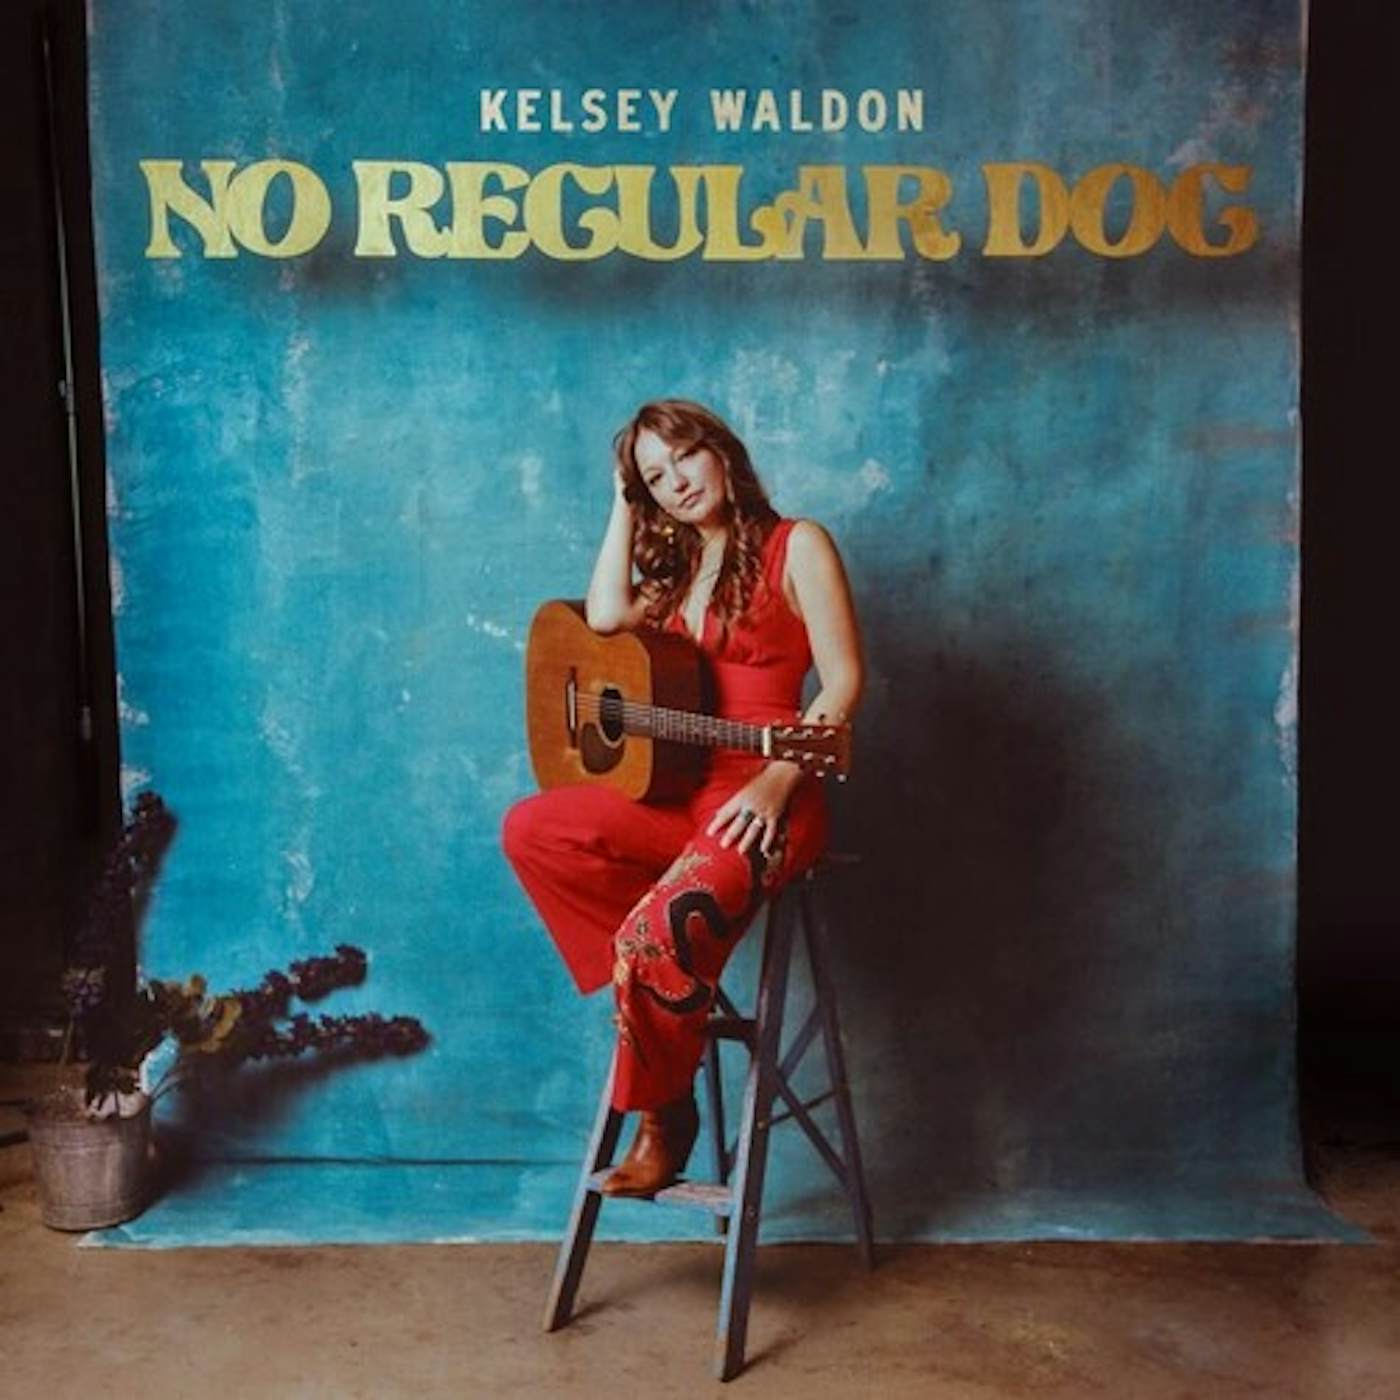 Kelsey Waldon No Regular Dog Vinyl Record